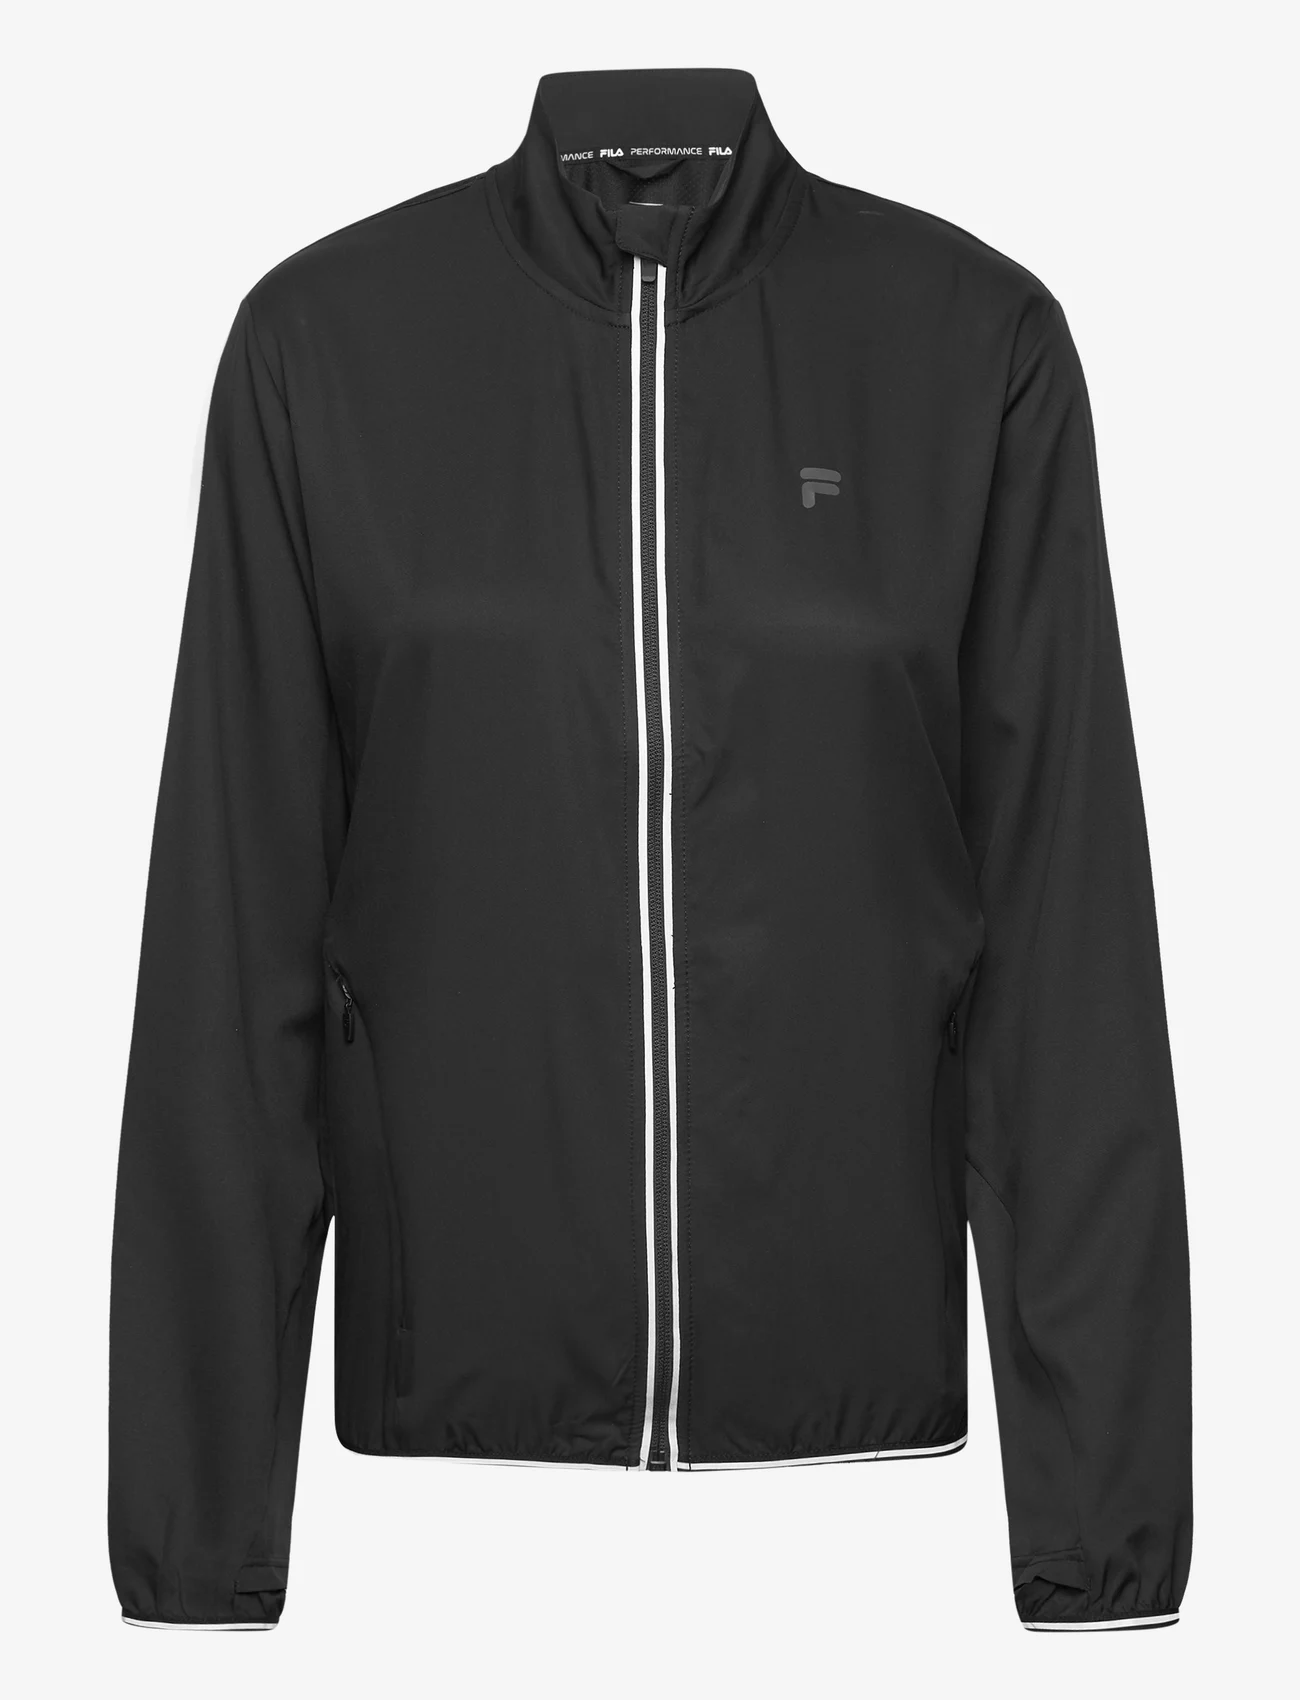 FILA - RONCHAMP running jacket - athleisure jassen - black - 0